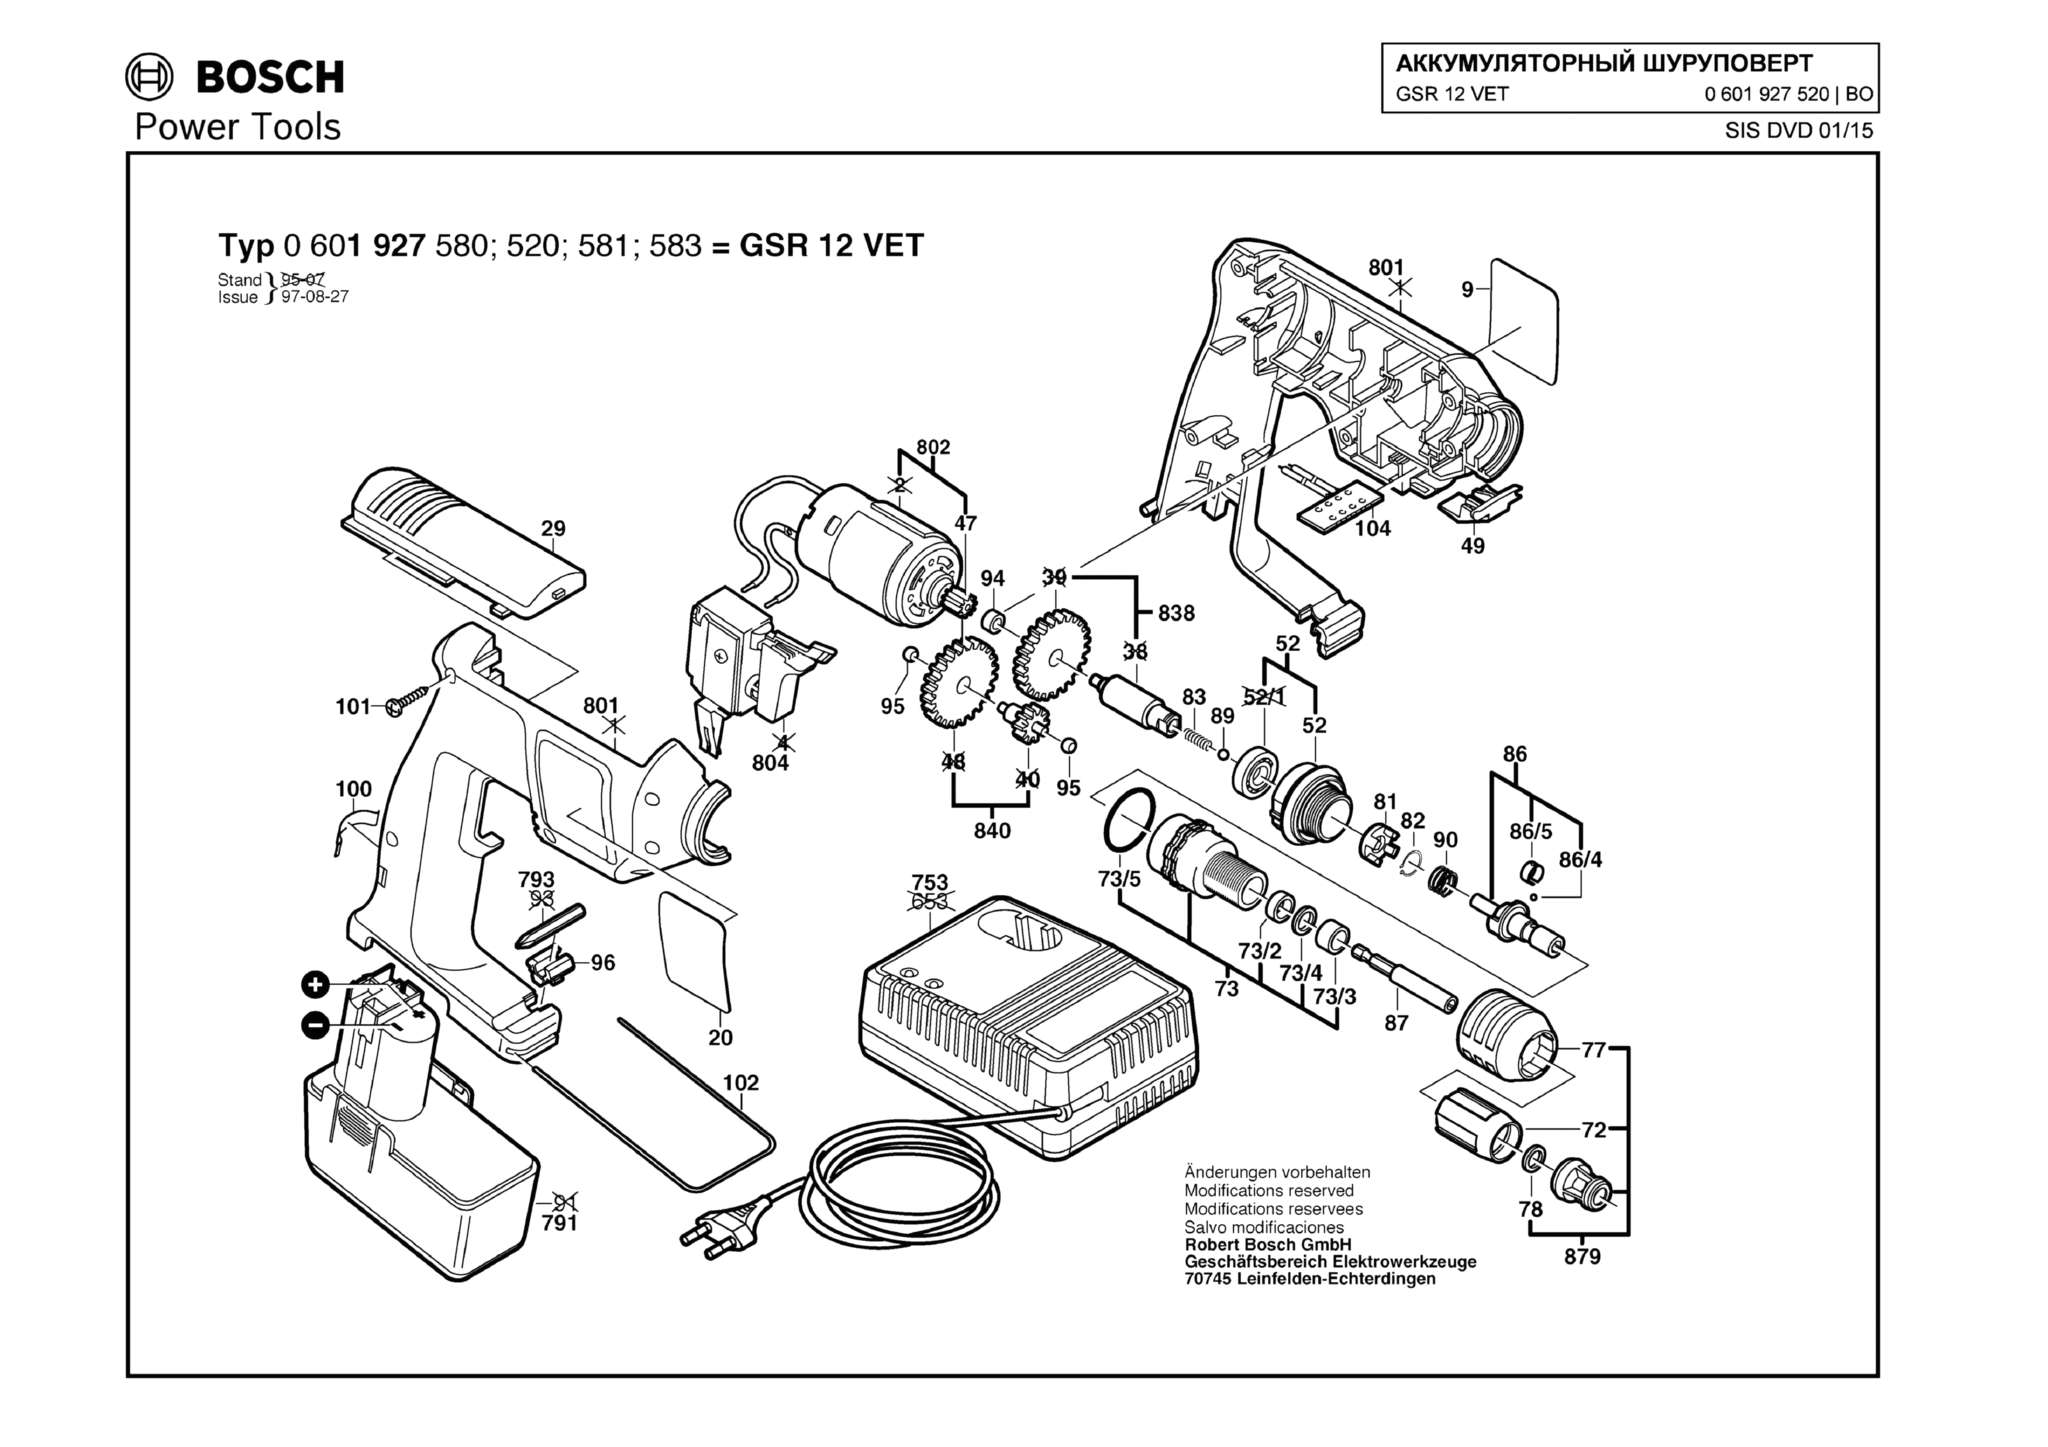 Запчасти, схема и деталировка Bosch GSR 12 VET (ТИП 0601927520)